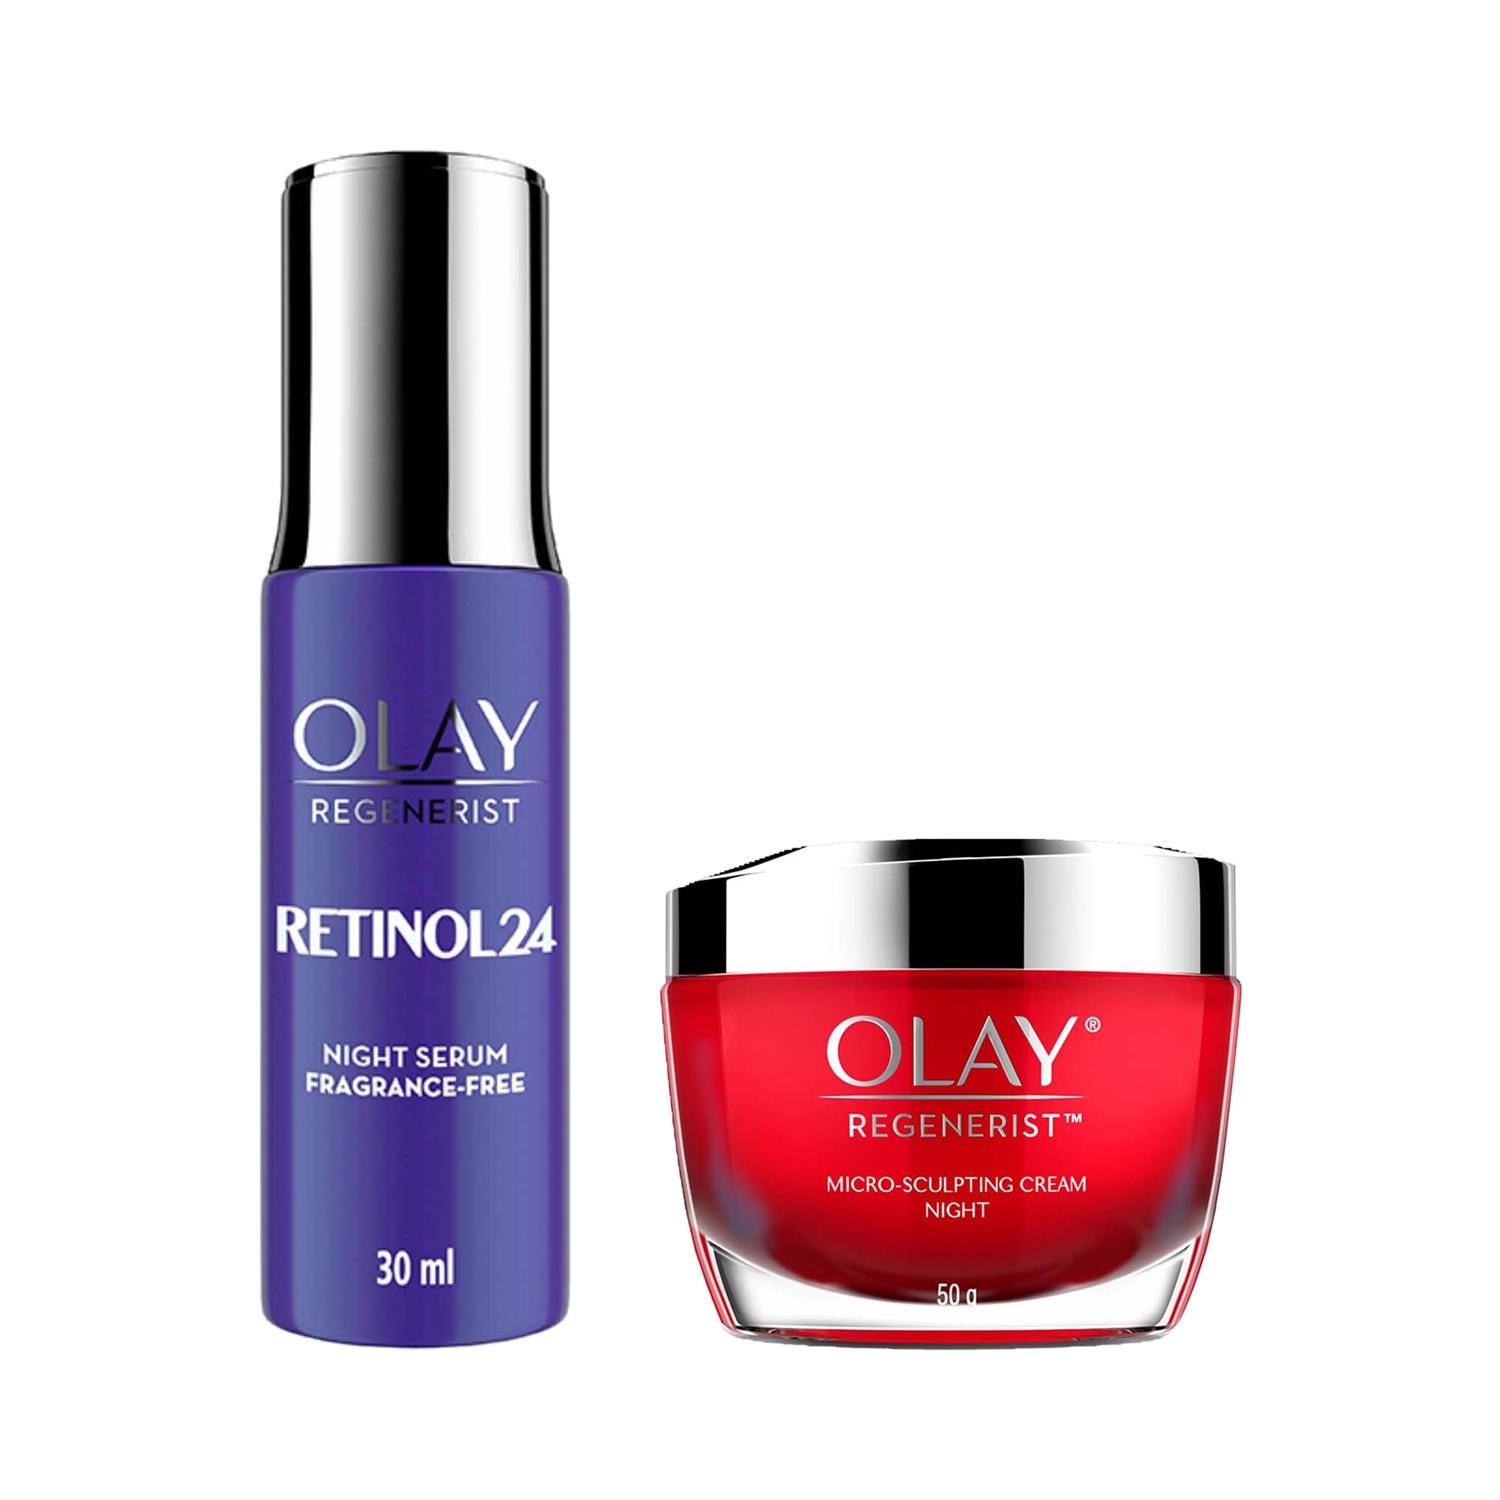 Olay | Olay Retinol Night Serum (30ml) And Olay Regenerist Micro-Sculpting Night Cream (50g) Combo